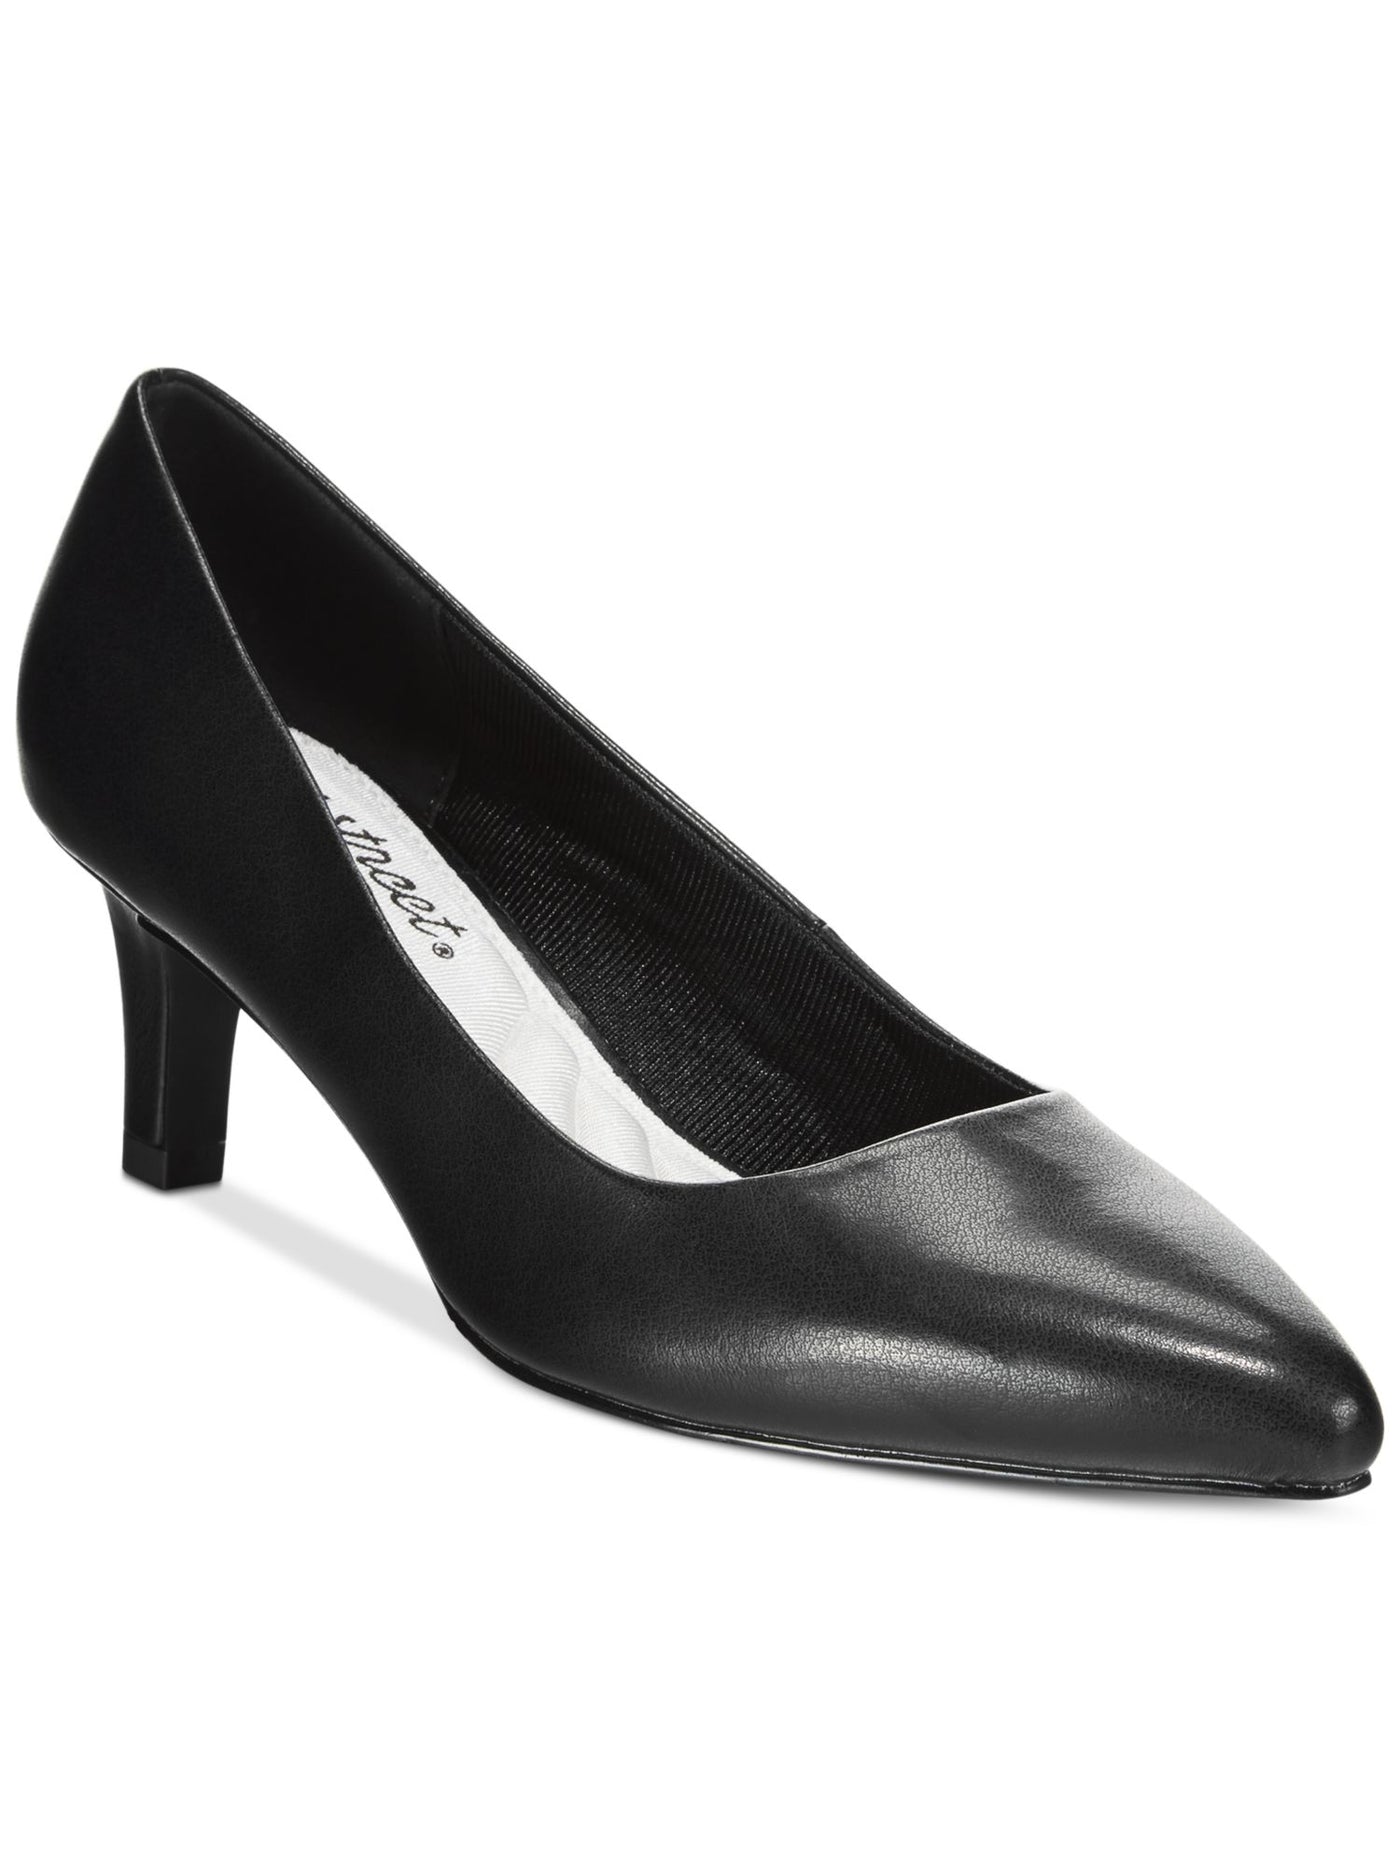 EASY STREET Womens Black Padded Comfort Pointe Pointed Toe Kitten Heel Slip On Dress Pumps Shoes 6 M